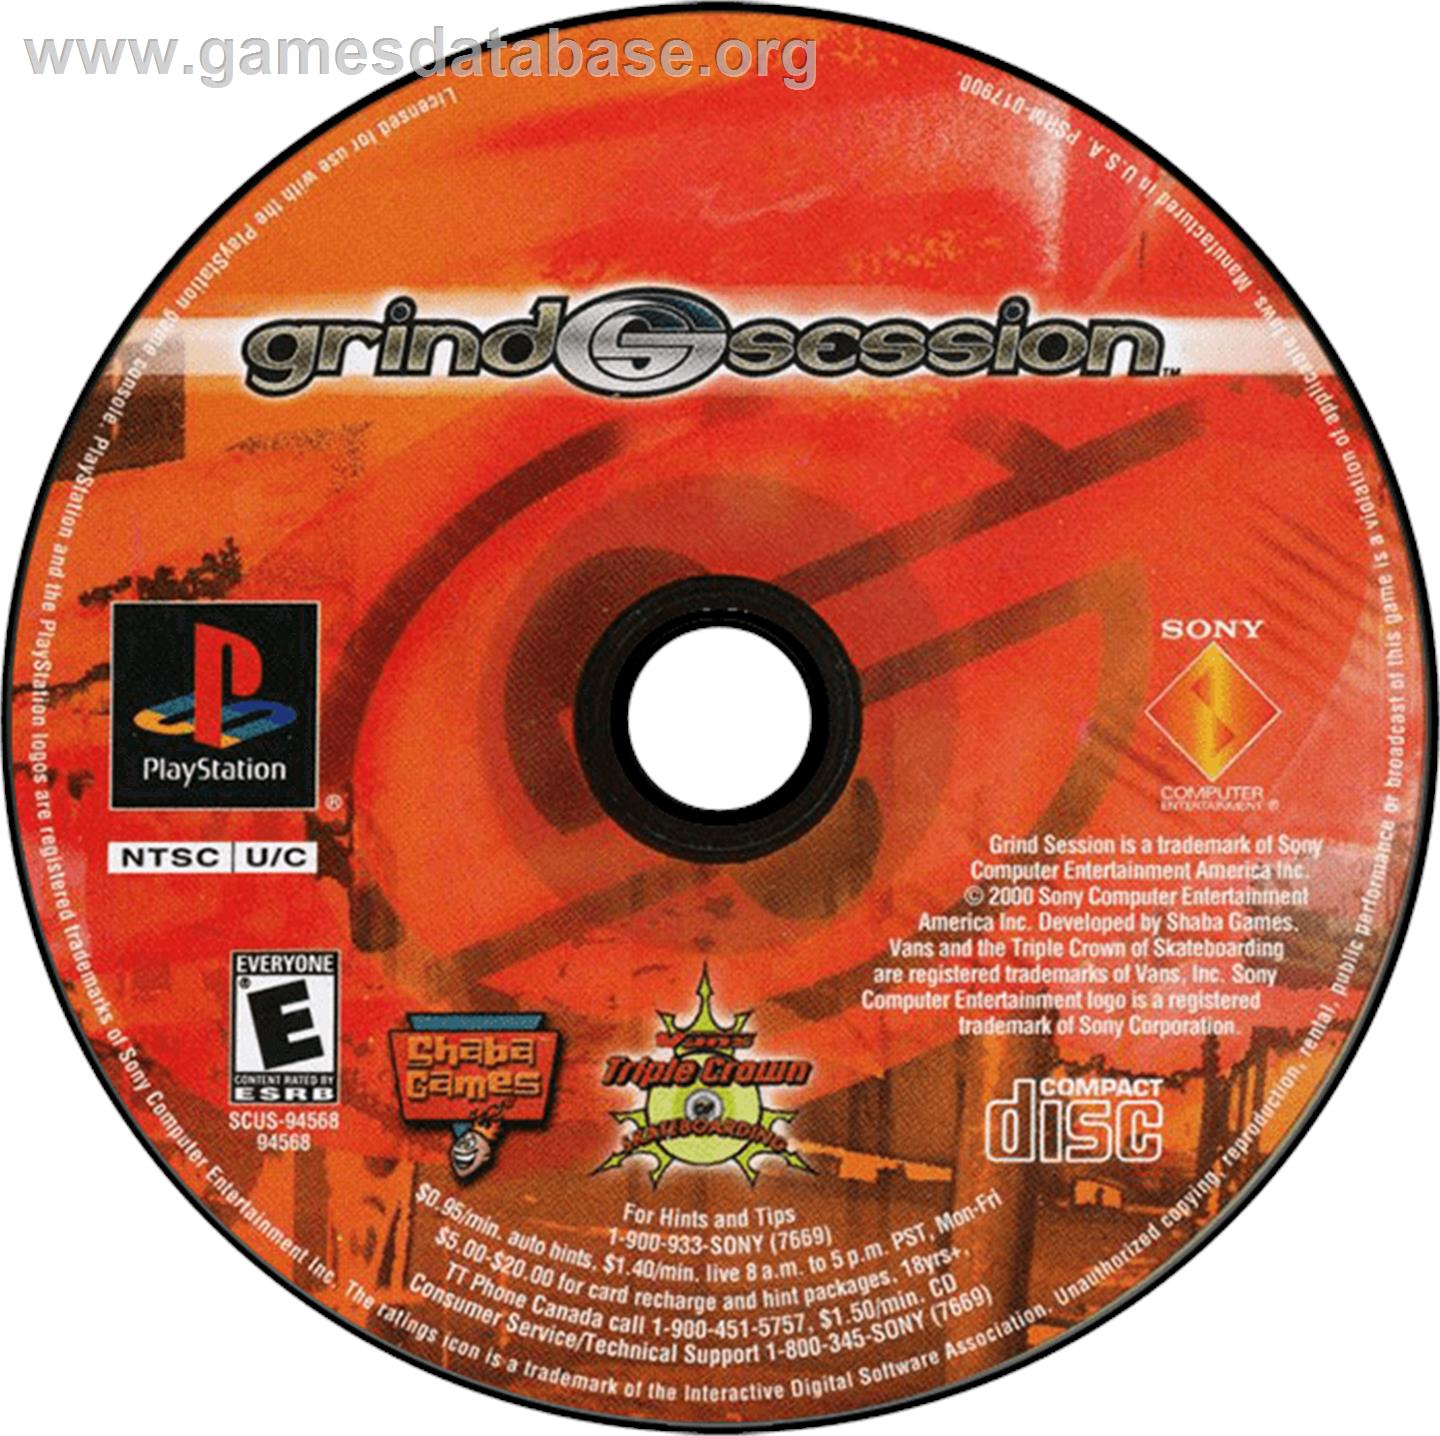 Grind Session - Sony Playstation - Artwork - Disc